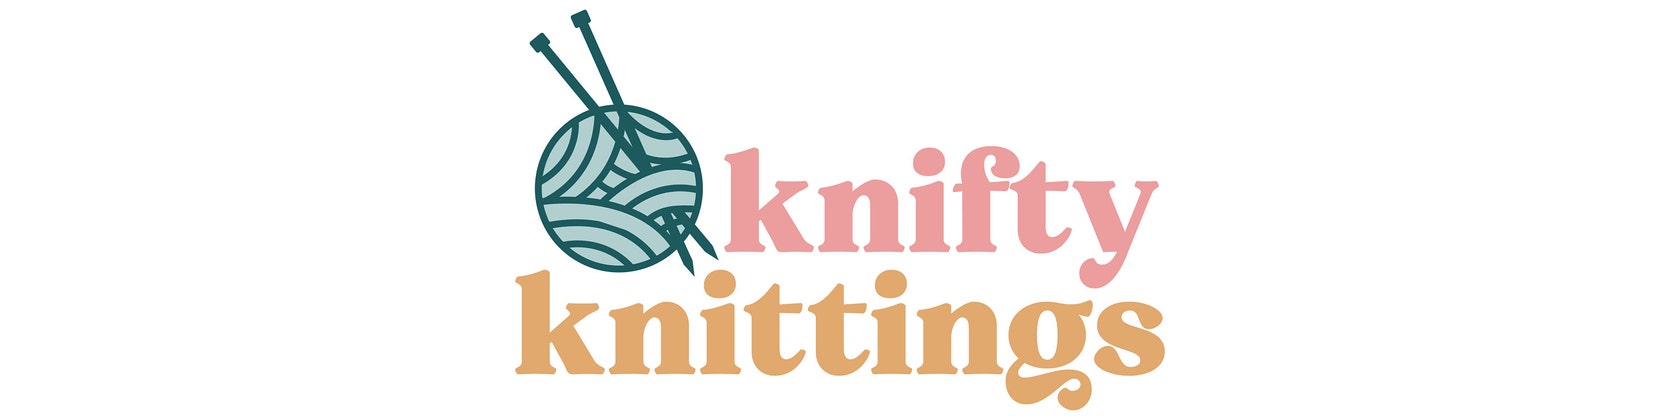 KniftyKnittings - Etsy